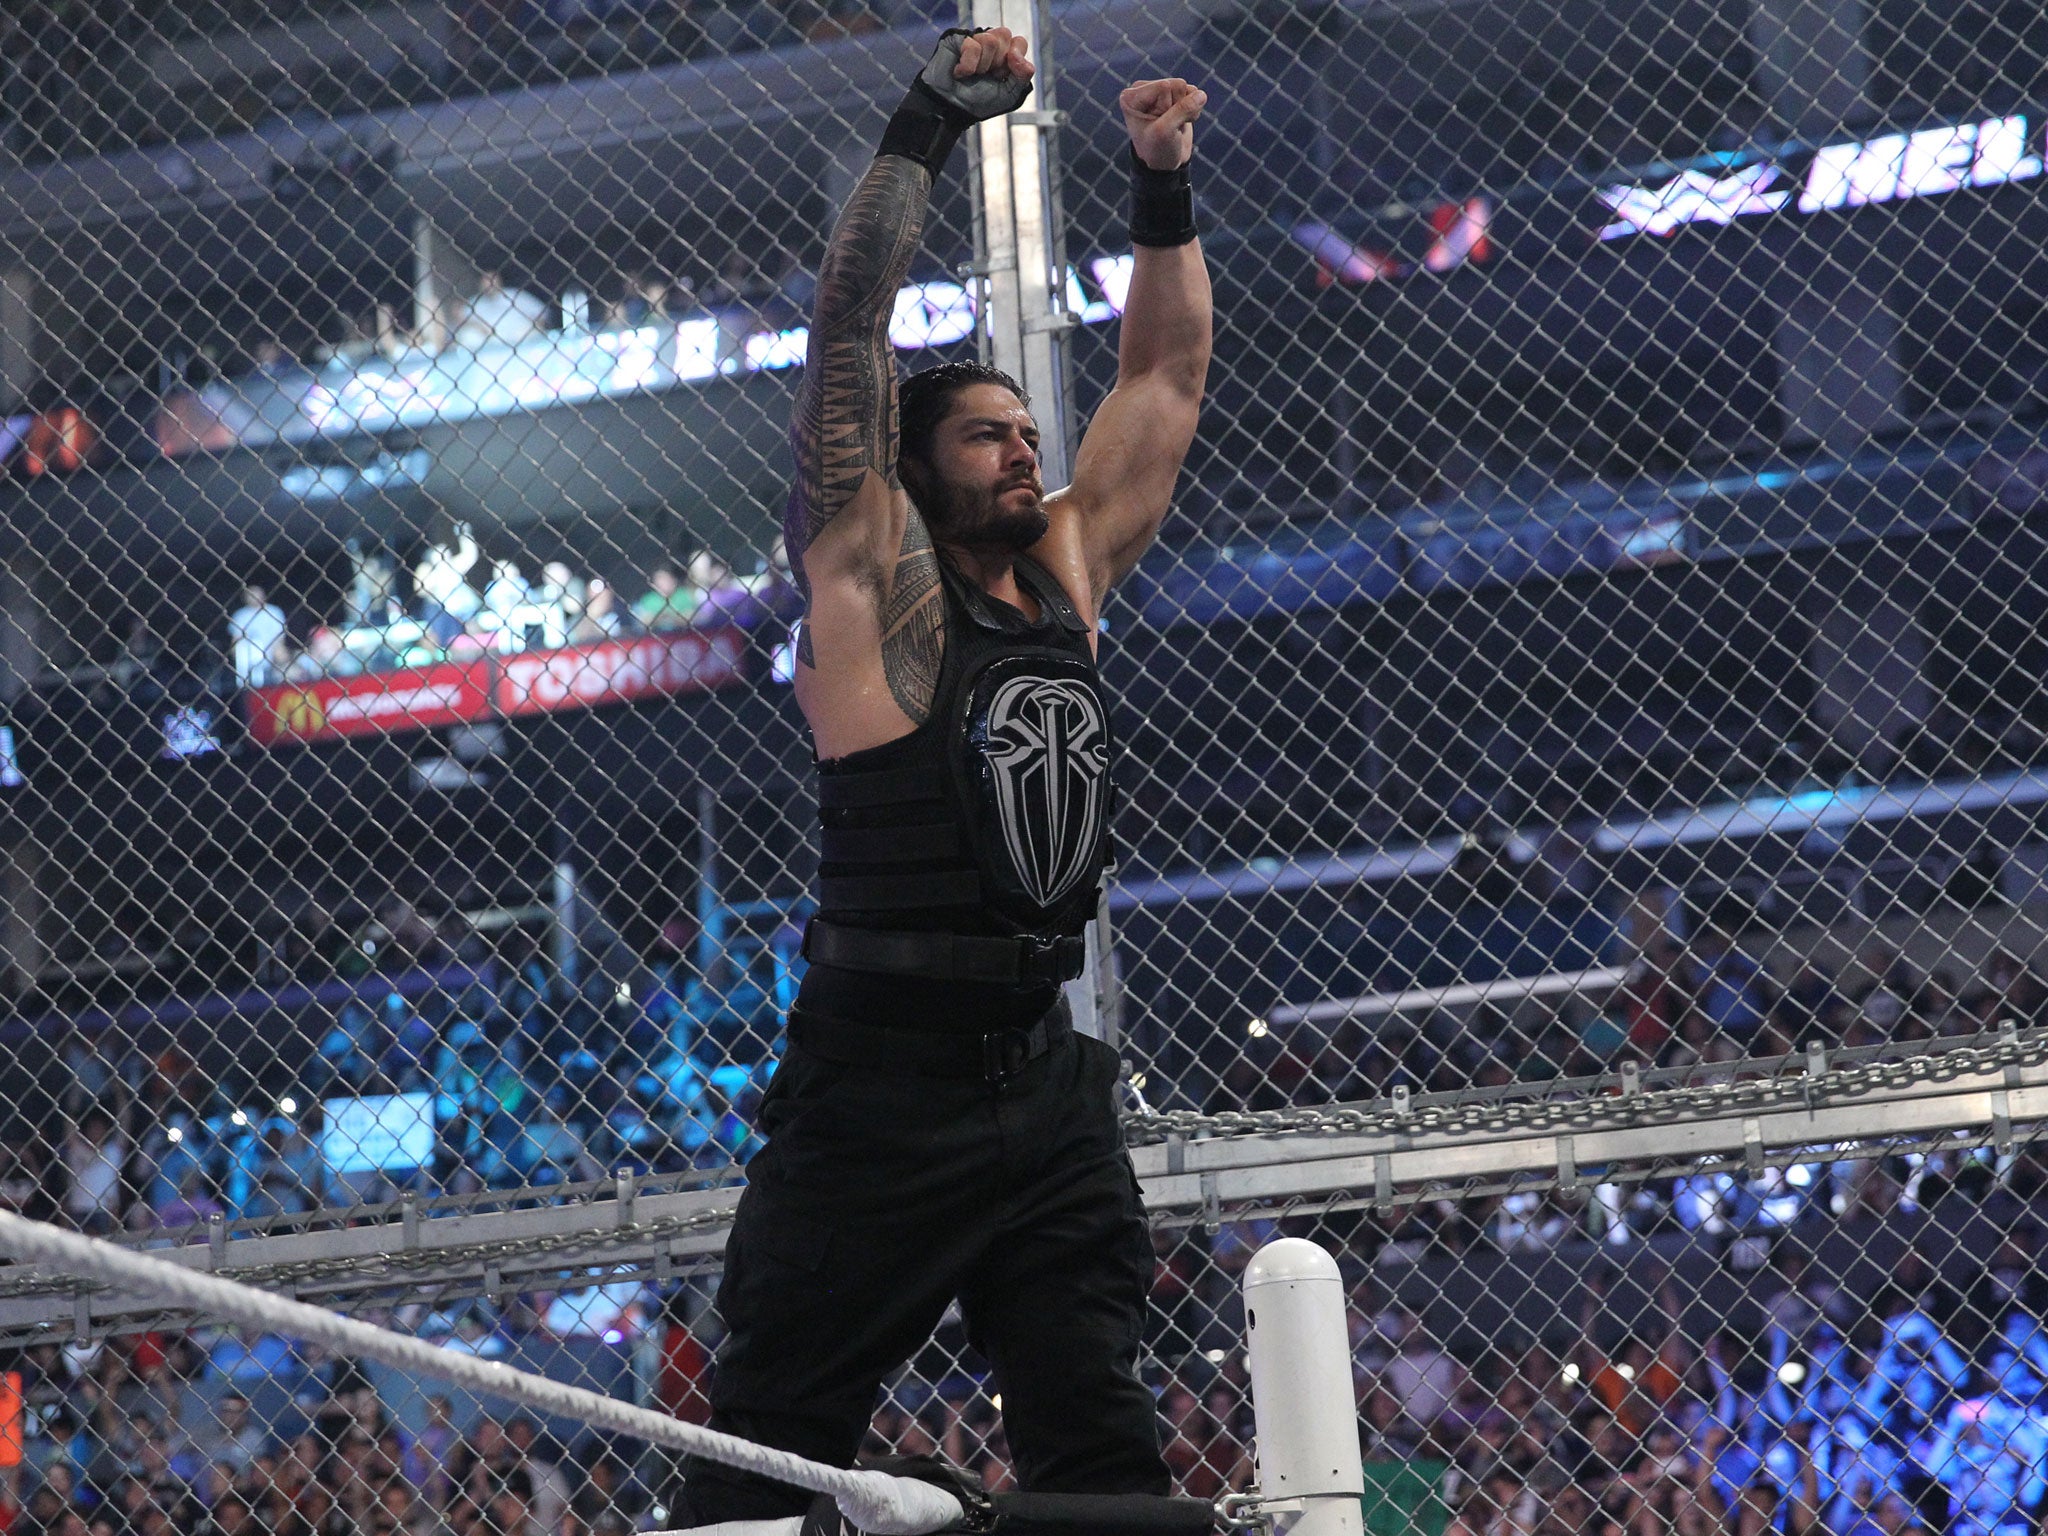 Roman Reigns celebrates his victory over Bray Wyatt